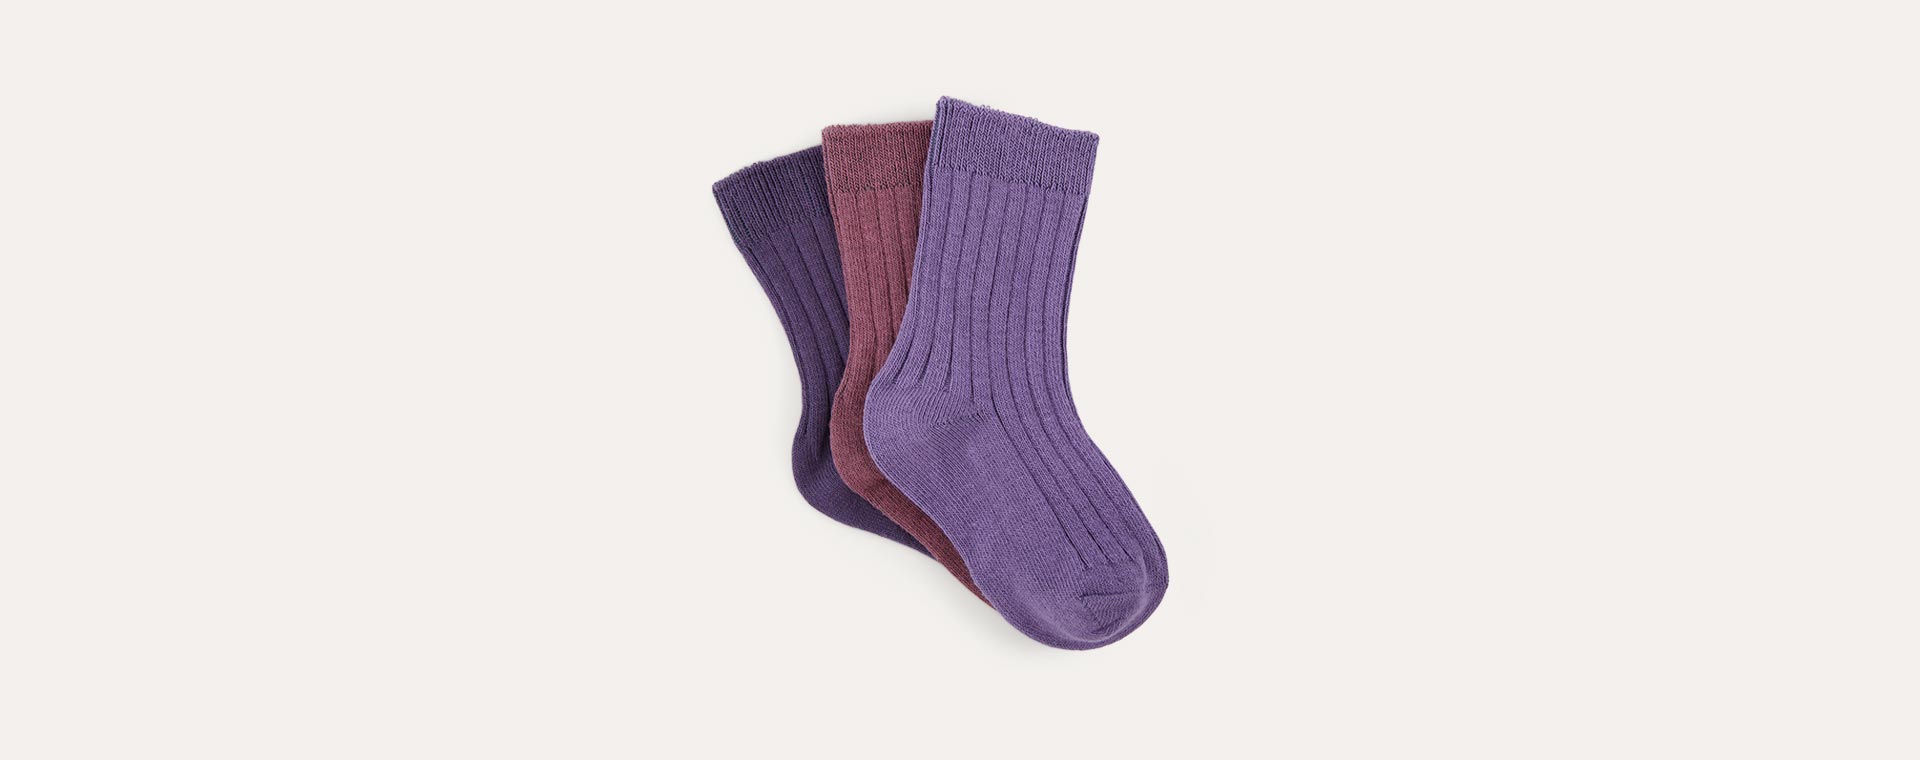 Buy the KIDLY Label 3-Pack Socks at KIDLY UK